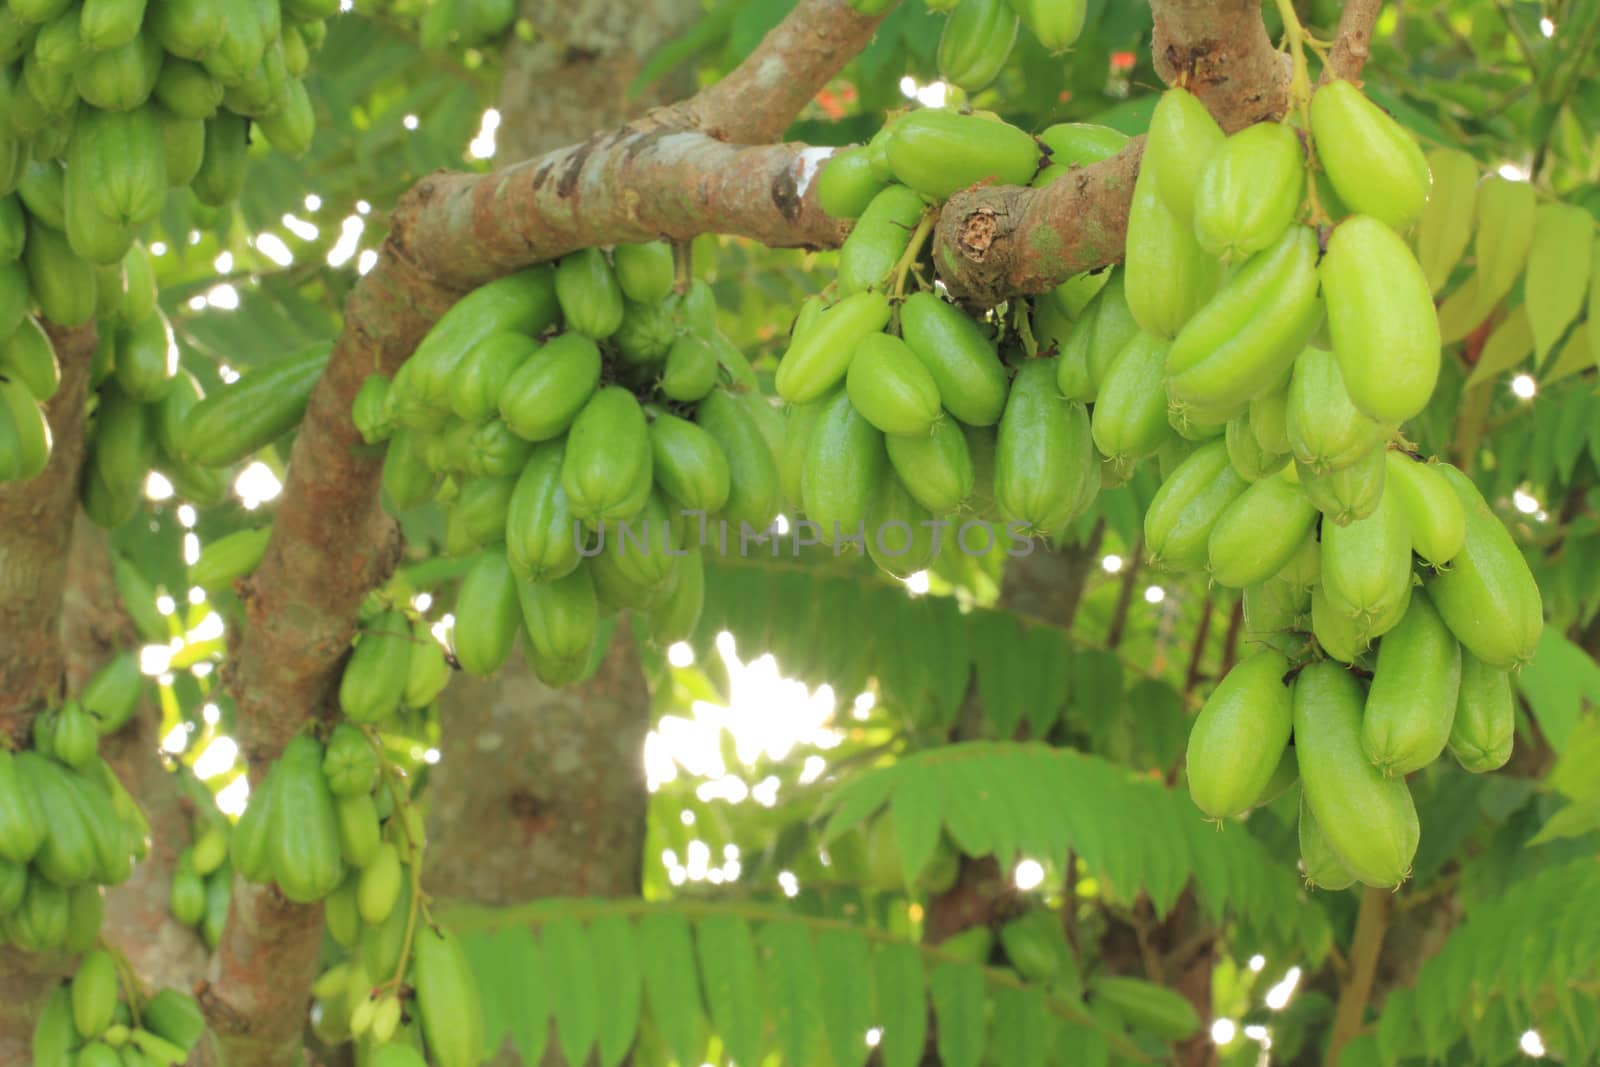 Bilimbi (Averhoa bilimbi Linn.) or cucumber fruits on tree